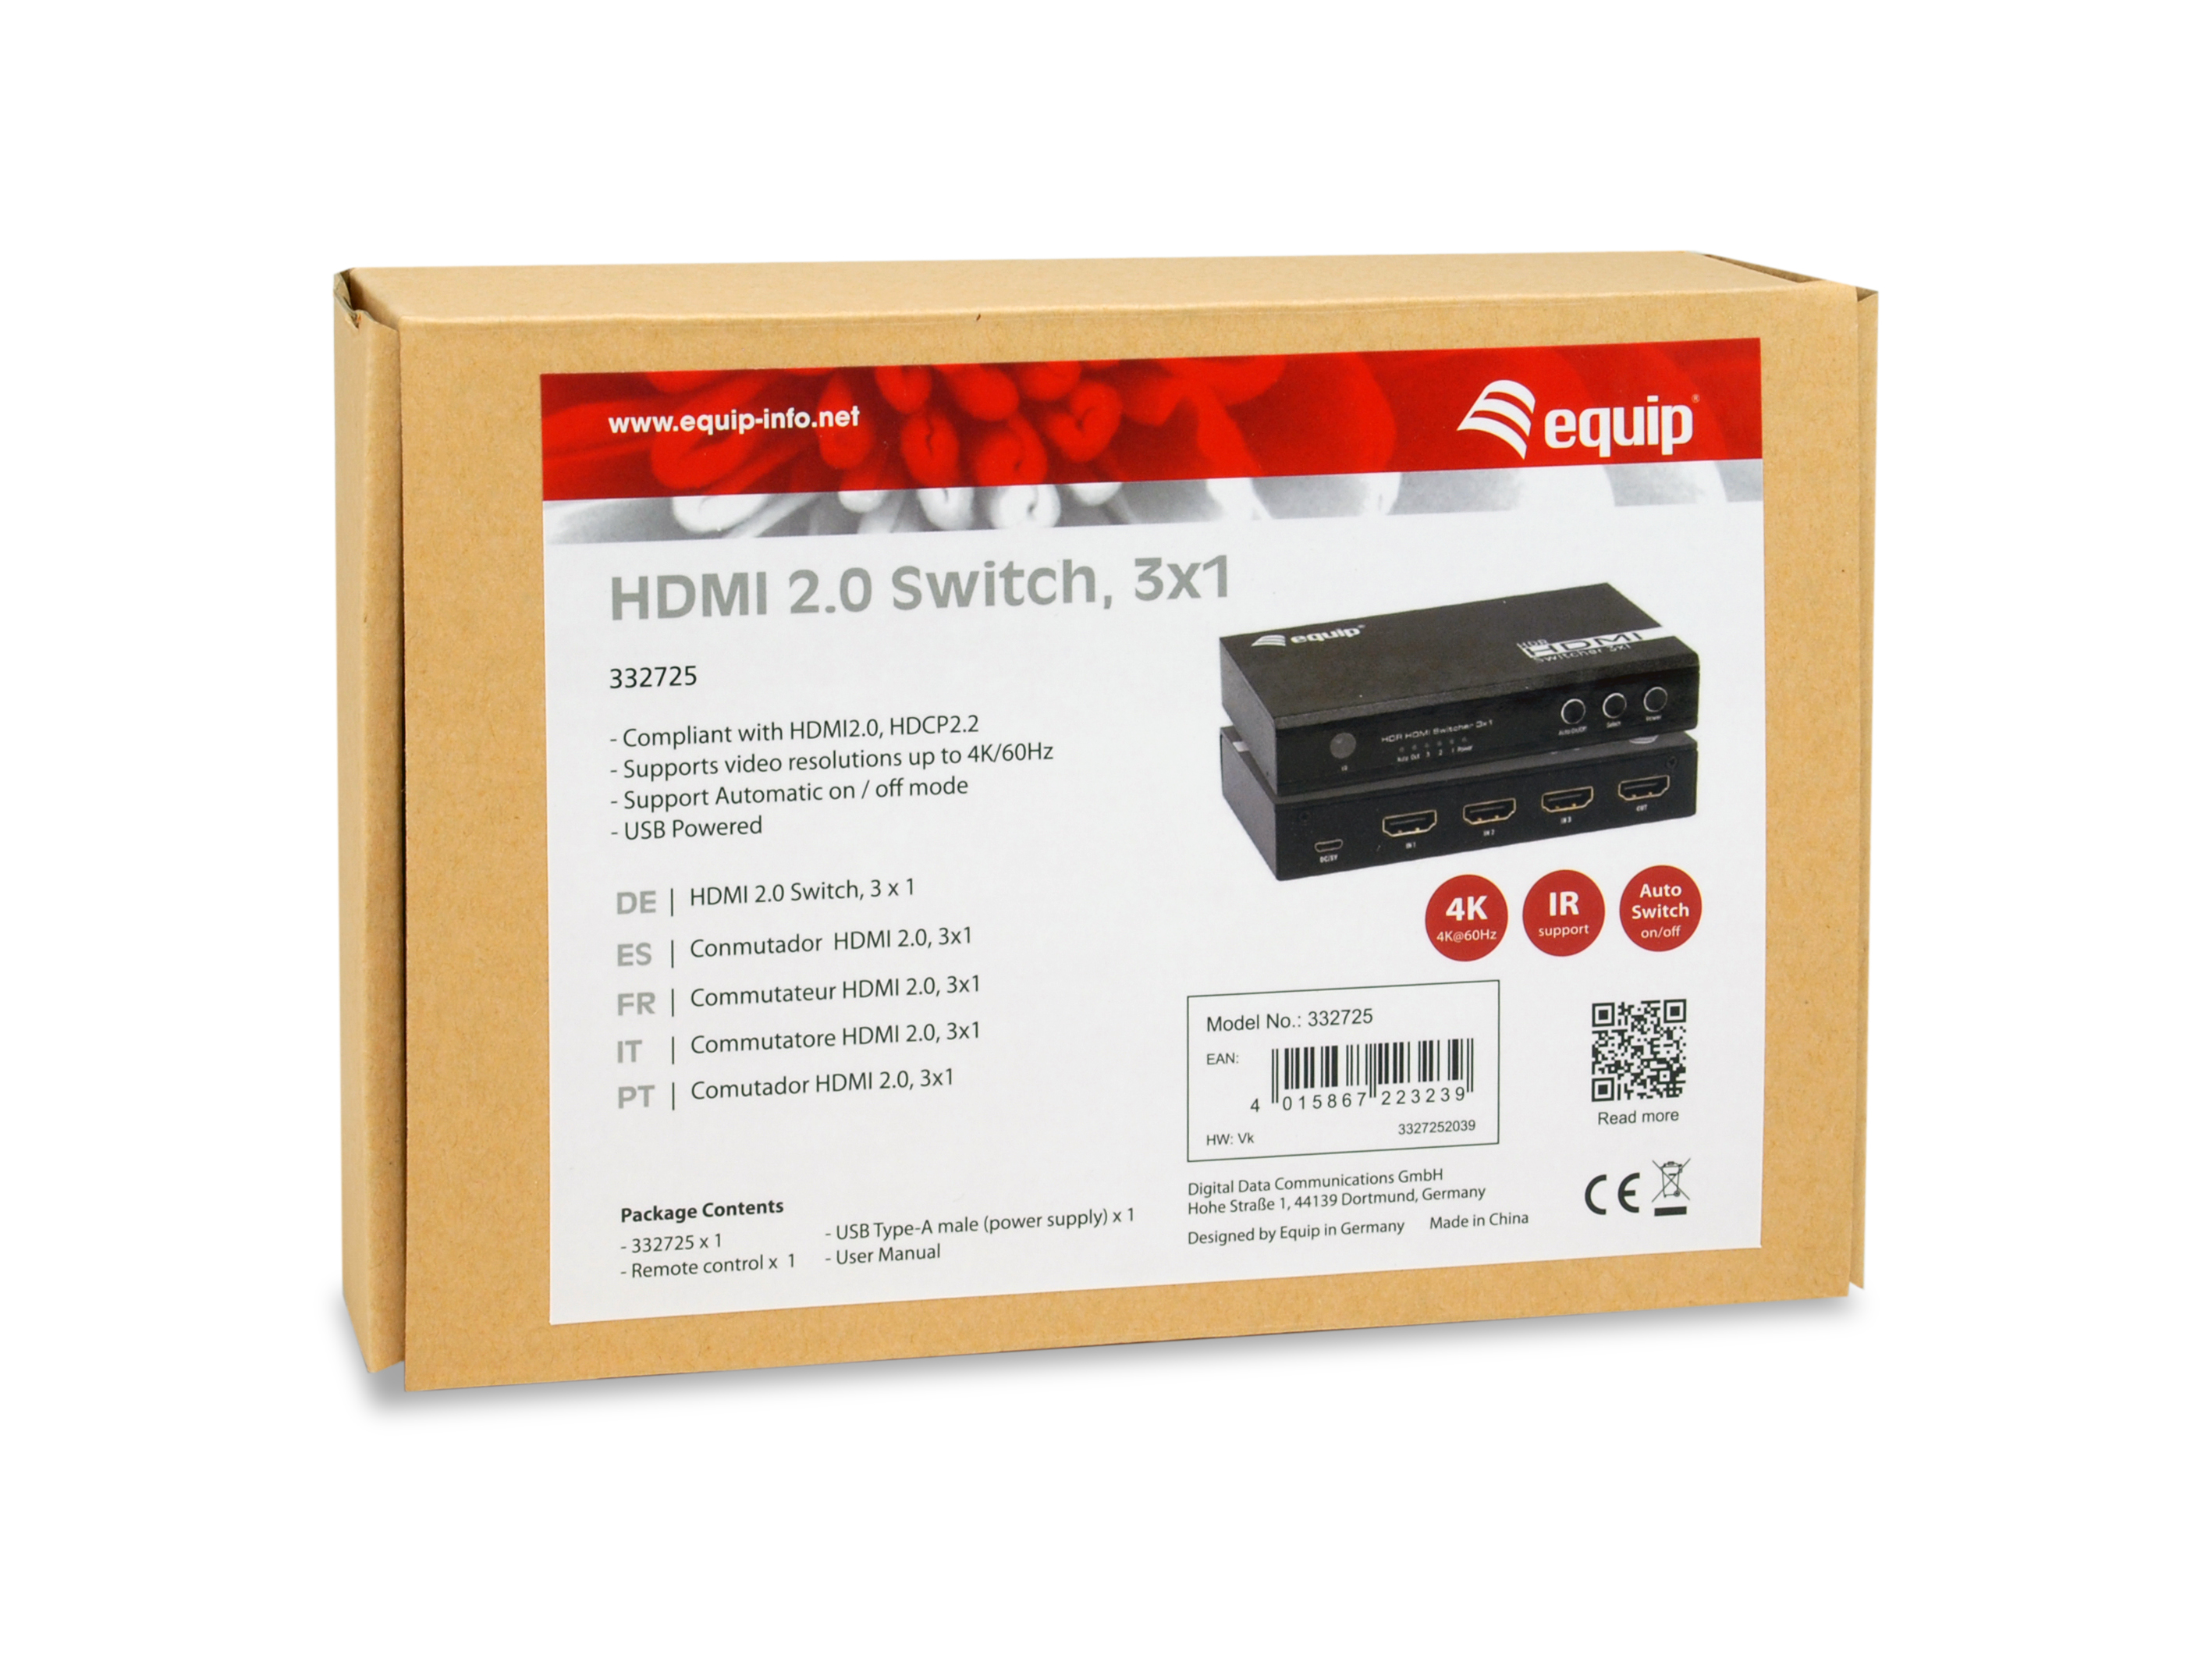 equip 332725 - HDMI - Schwarz - Aluminium - 60 Hz - 3840 x 2160 - 7.1 Kanäle